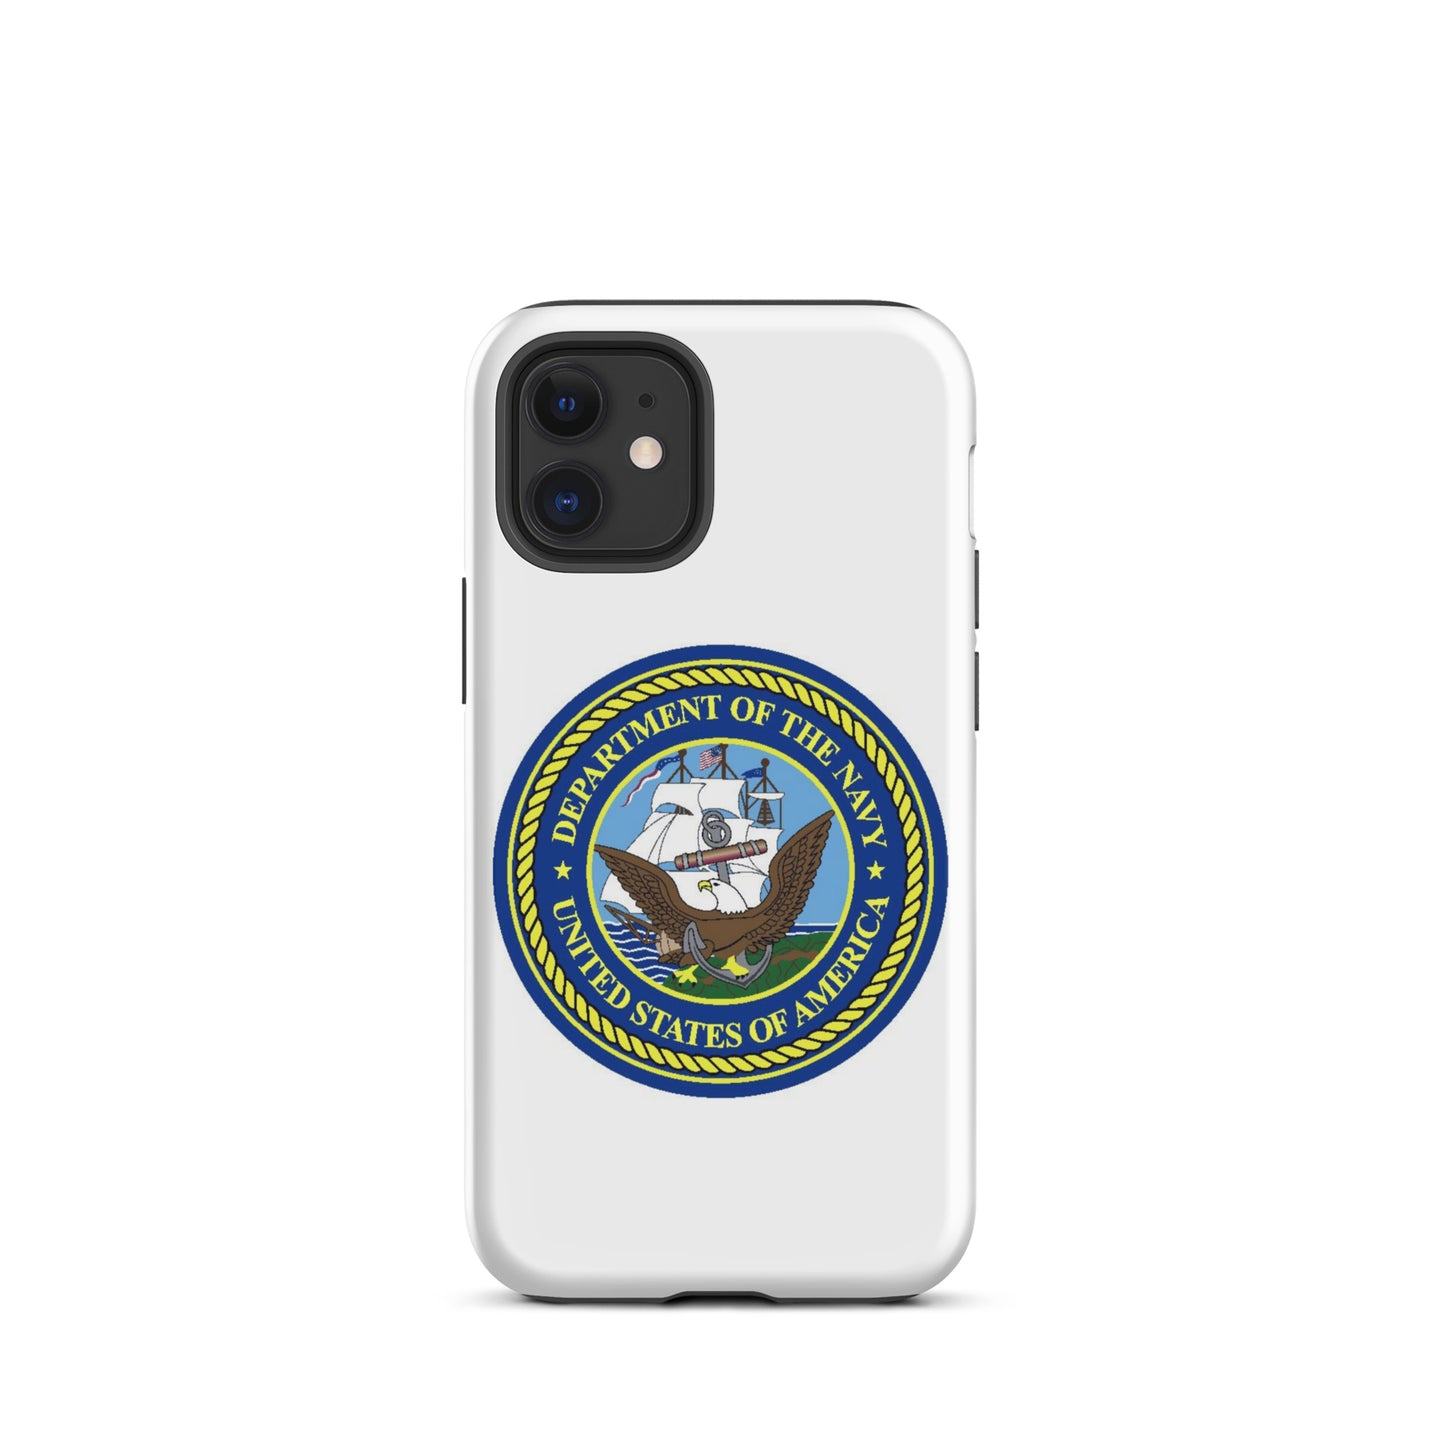 Navy iPhone case